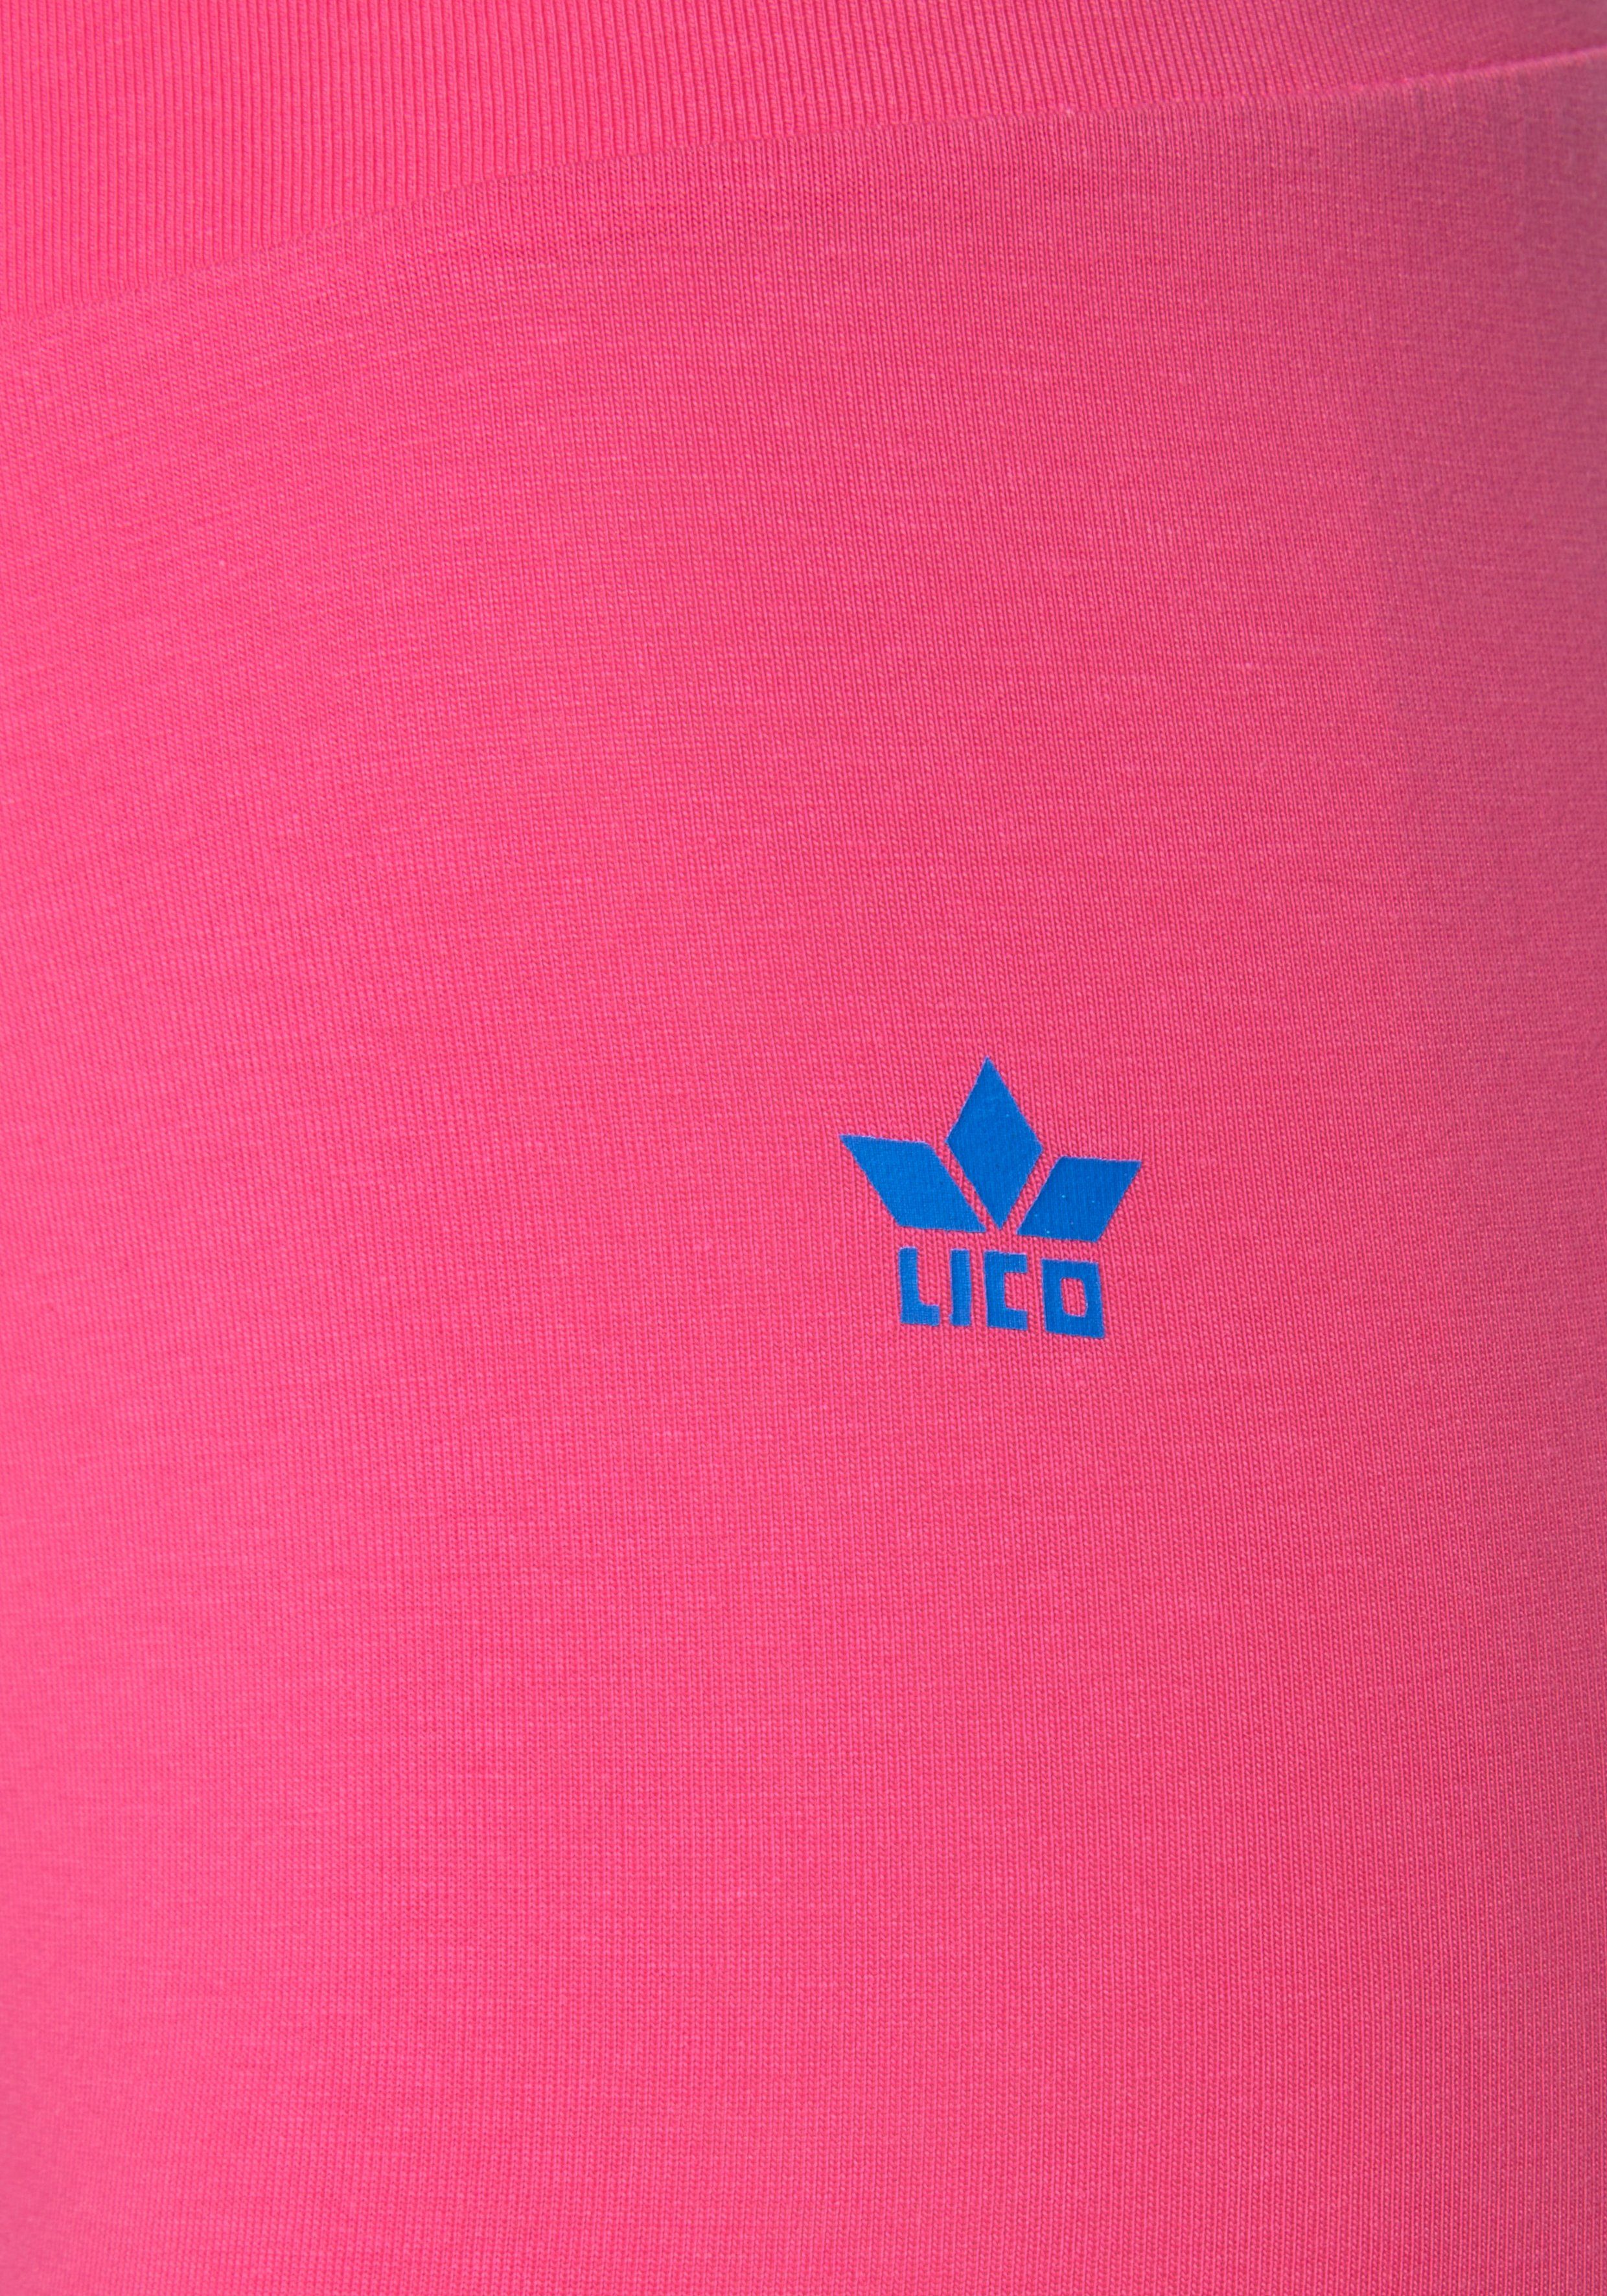 Leggings (2er-Pack) Doppelpack im Lico pink schwarz,